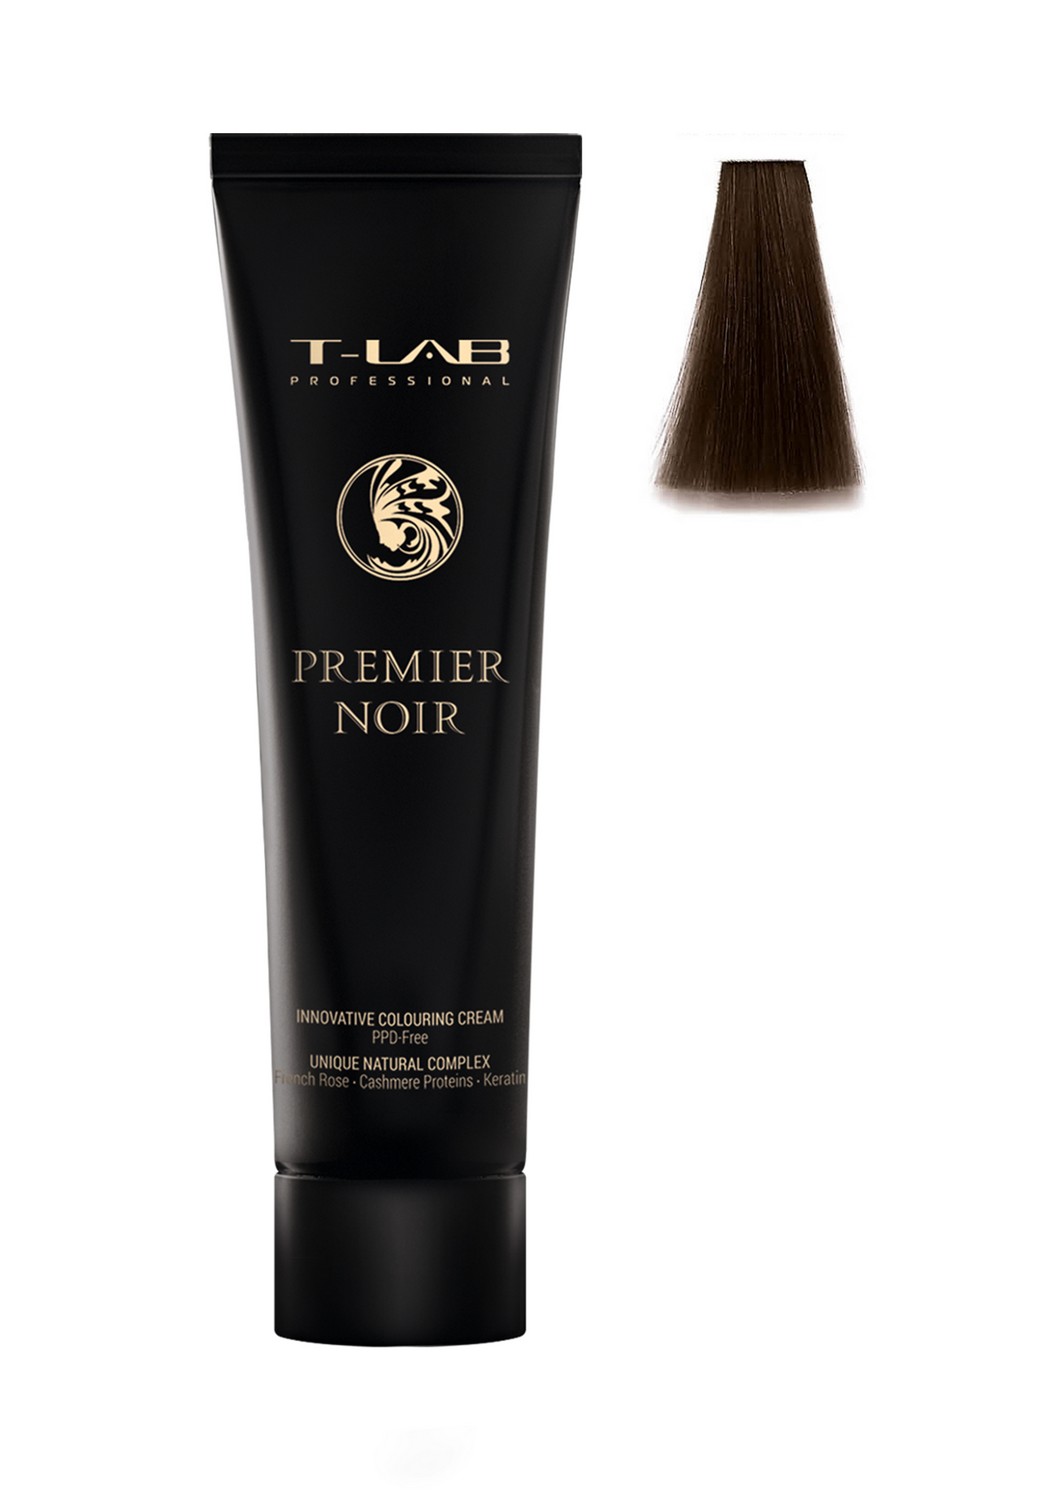 Крем-краска T-LAB Professional Premier Noir colouring cream, оттенок 3.0 (natural dark brown) - фото 2